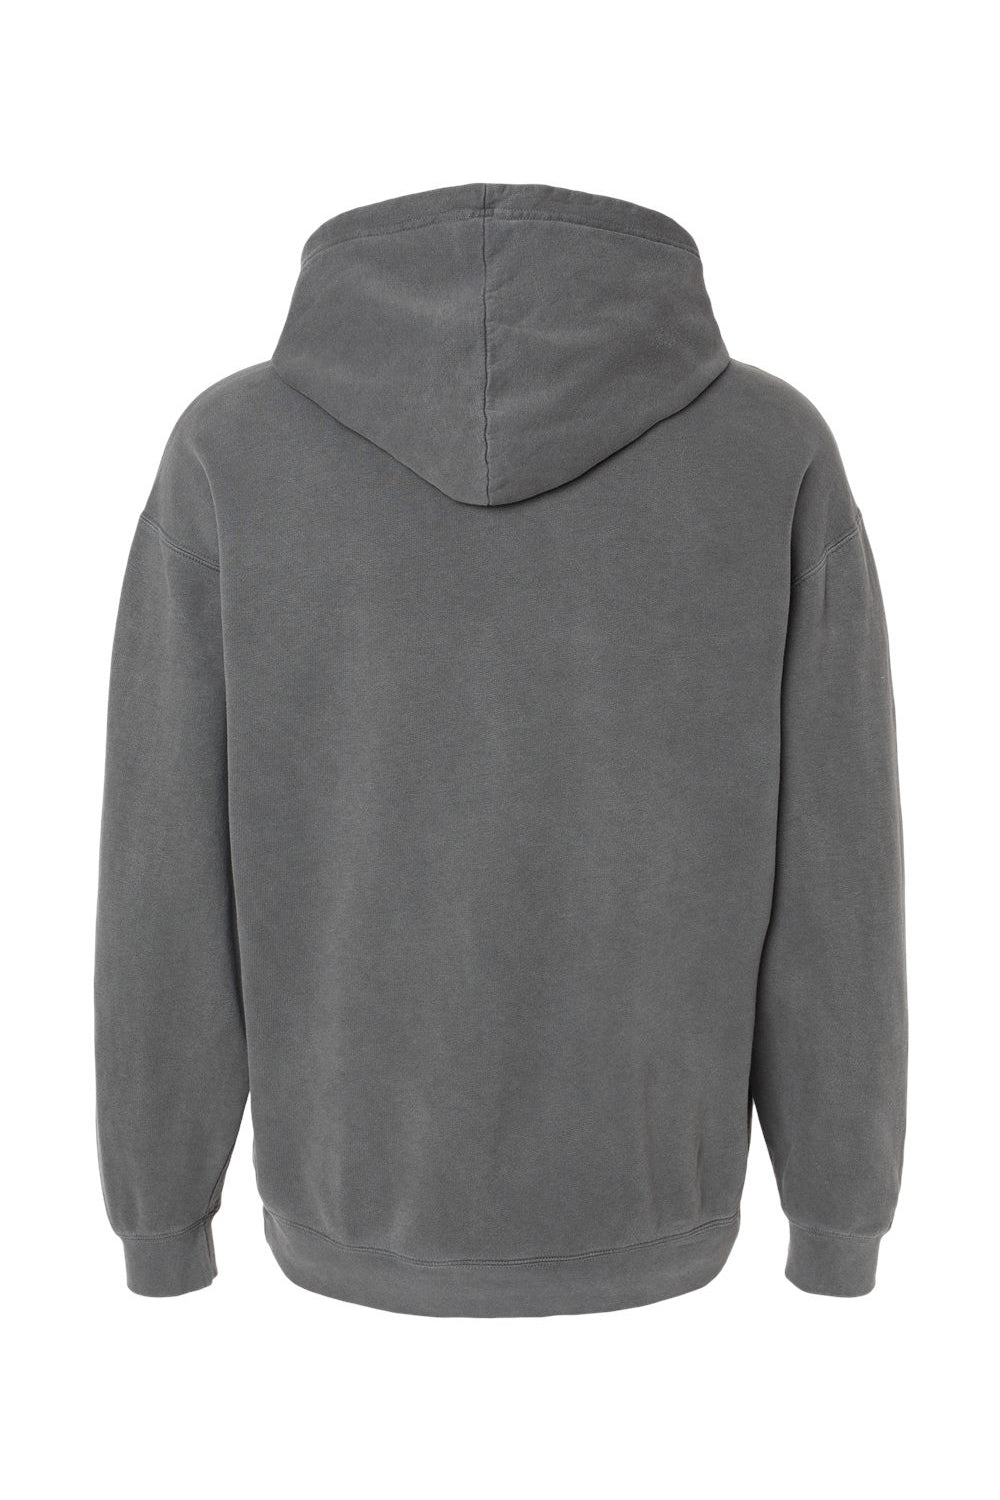 Comfort Colors 1467 Mens Garment Dyed Fleece Hooded Sweatshirt Hoodie Pepper Grey Flat Back